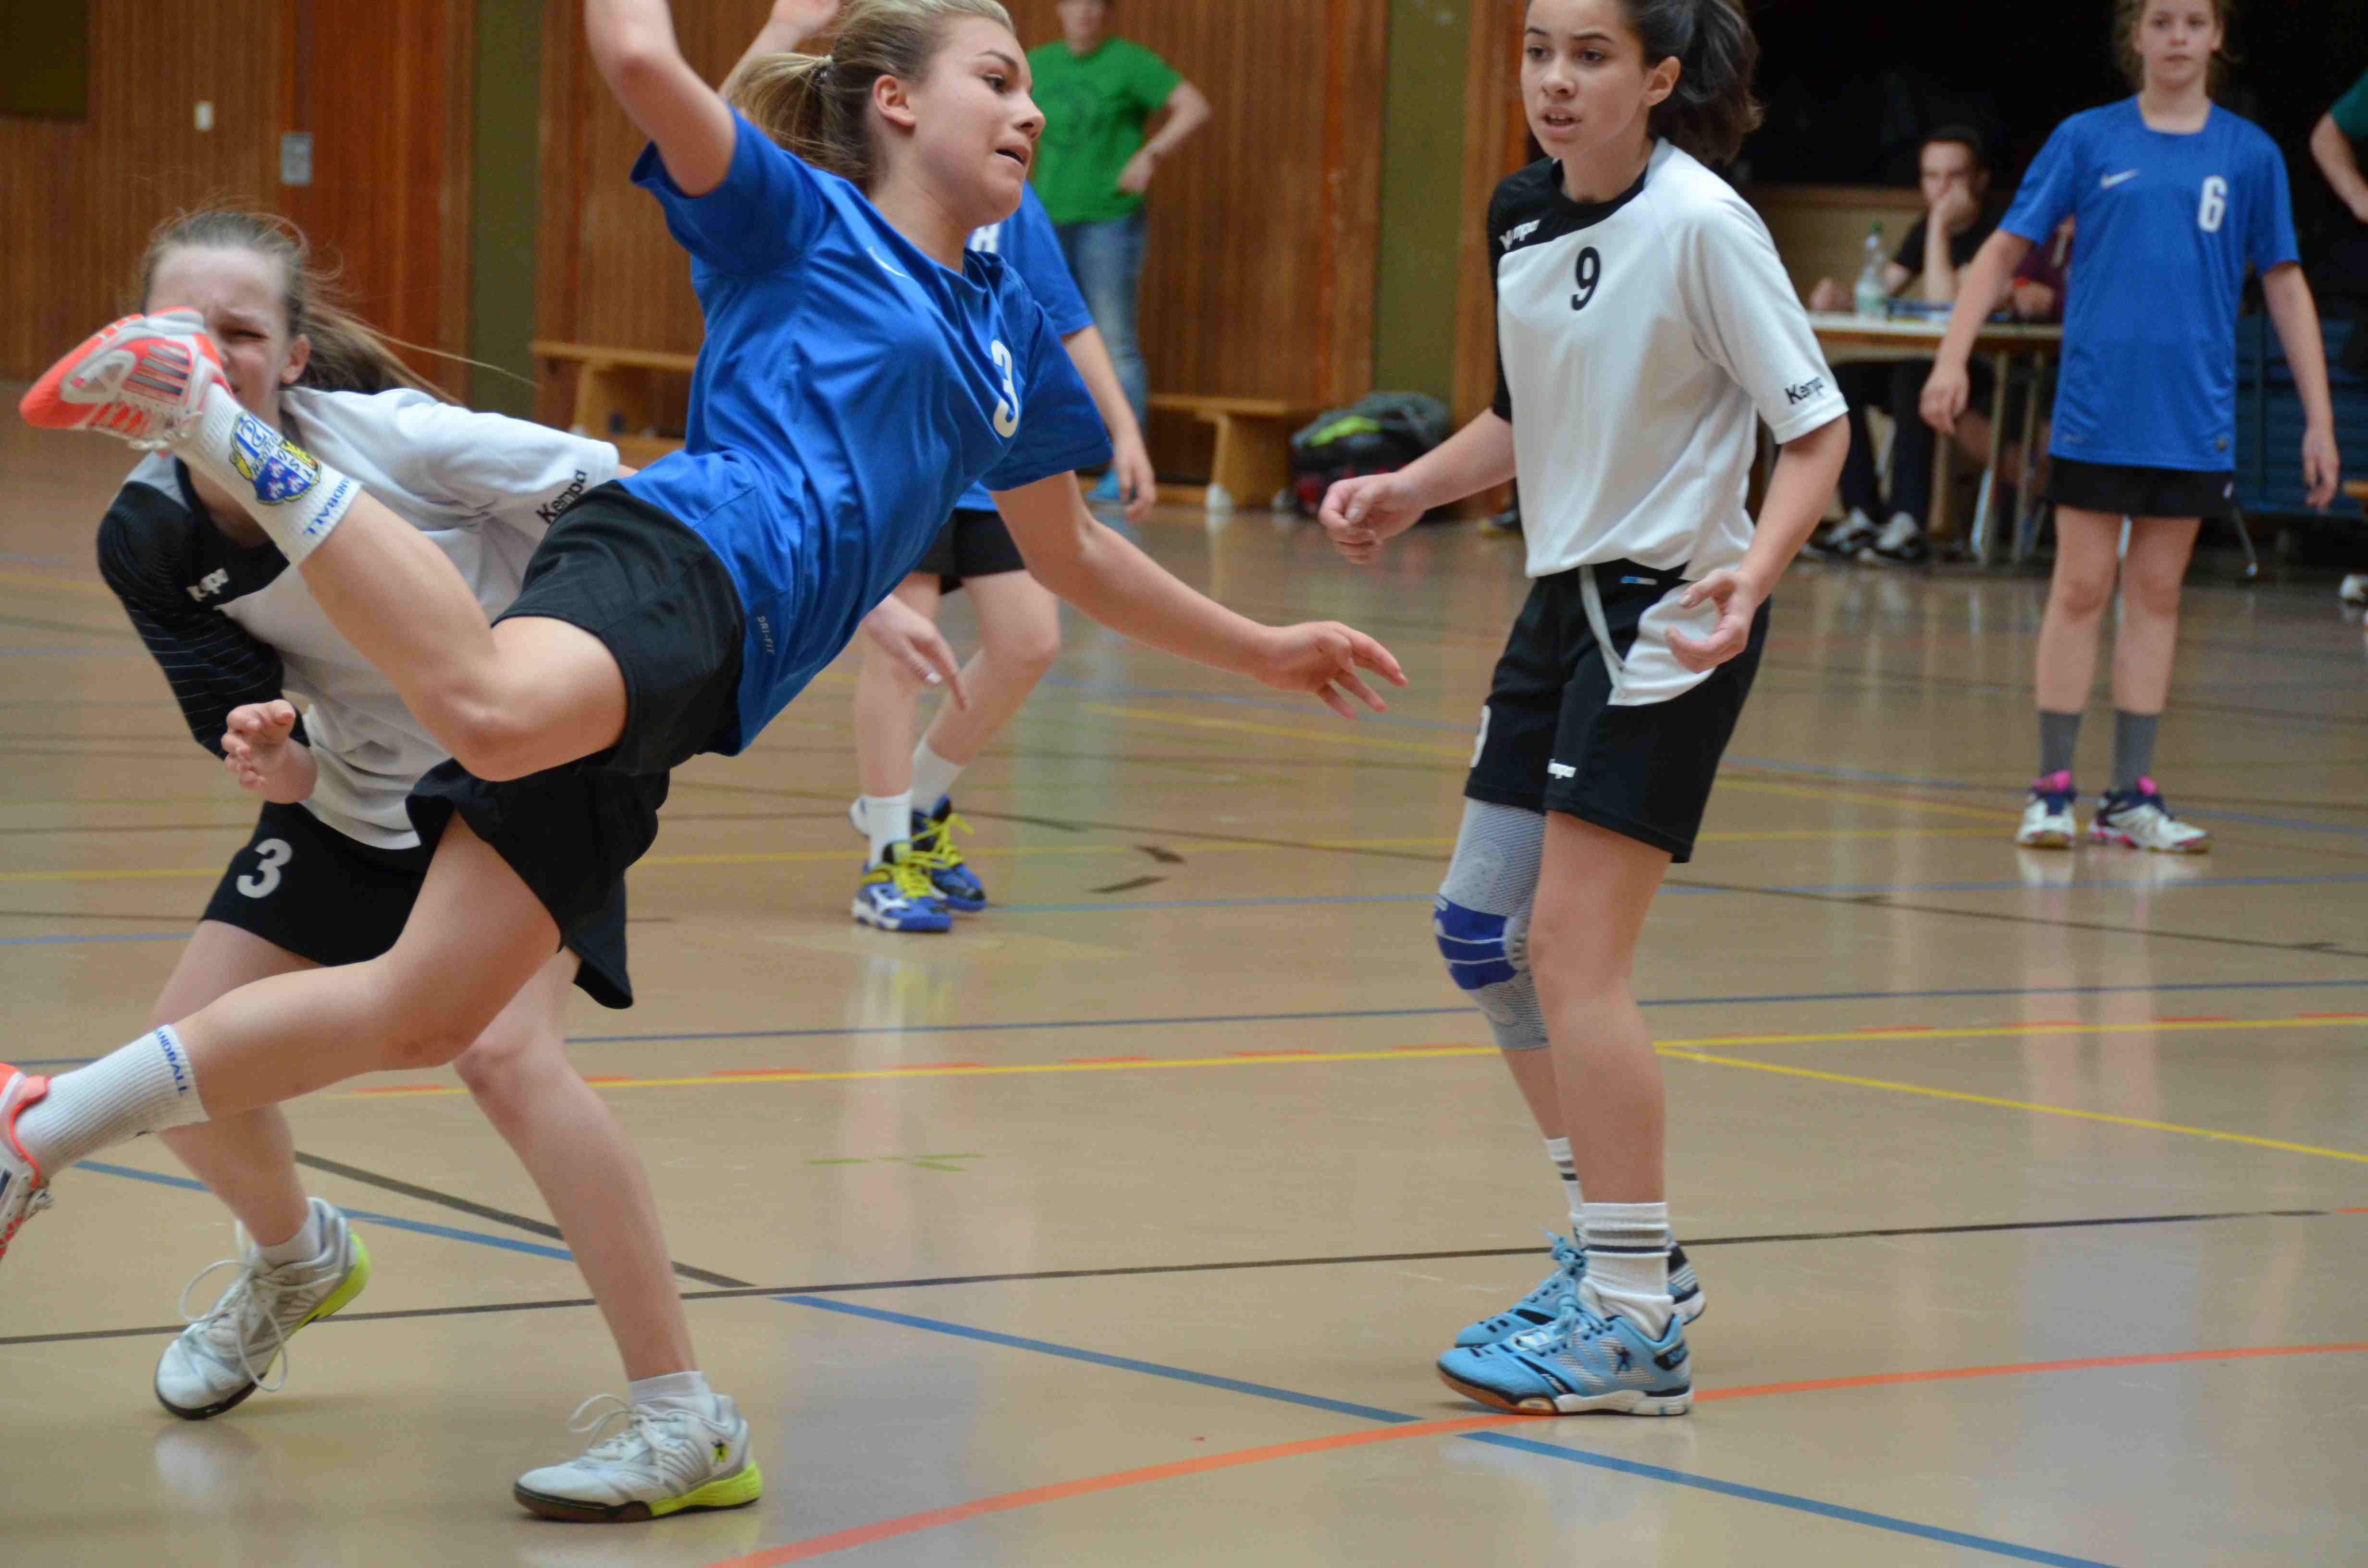 JtfO-Landesfinale-Handball-WKIV-Maedchen-April2015inDiez-13